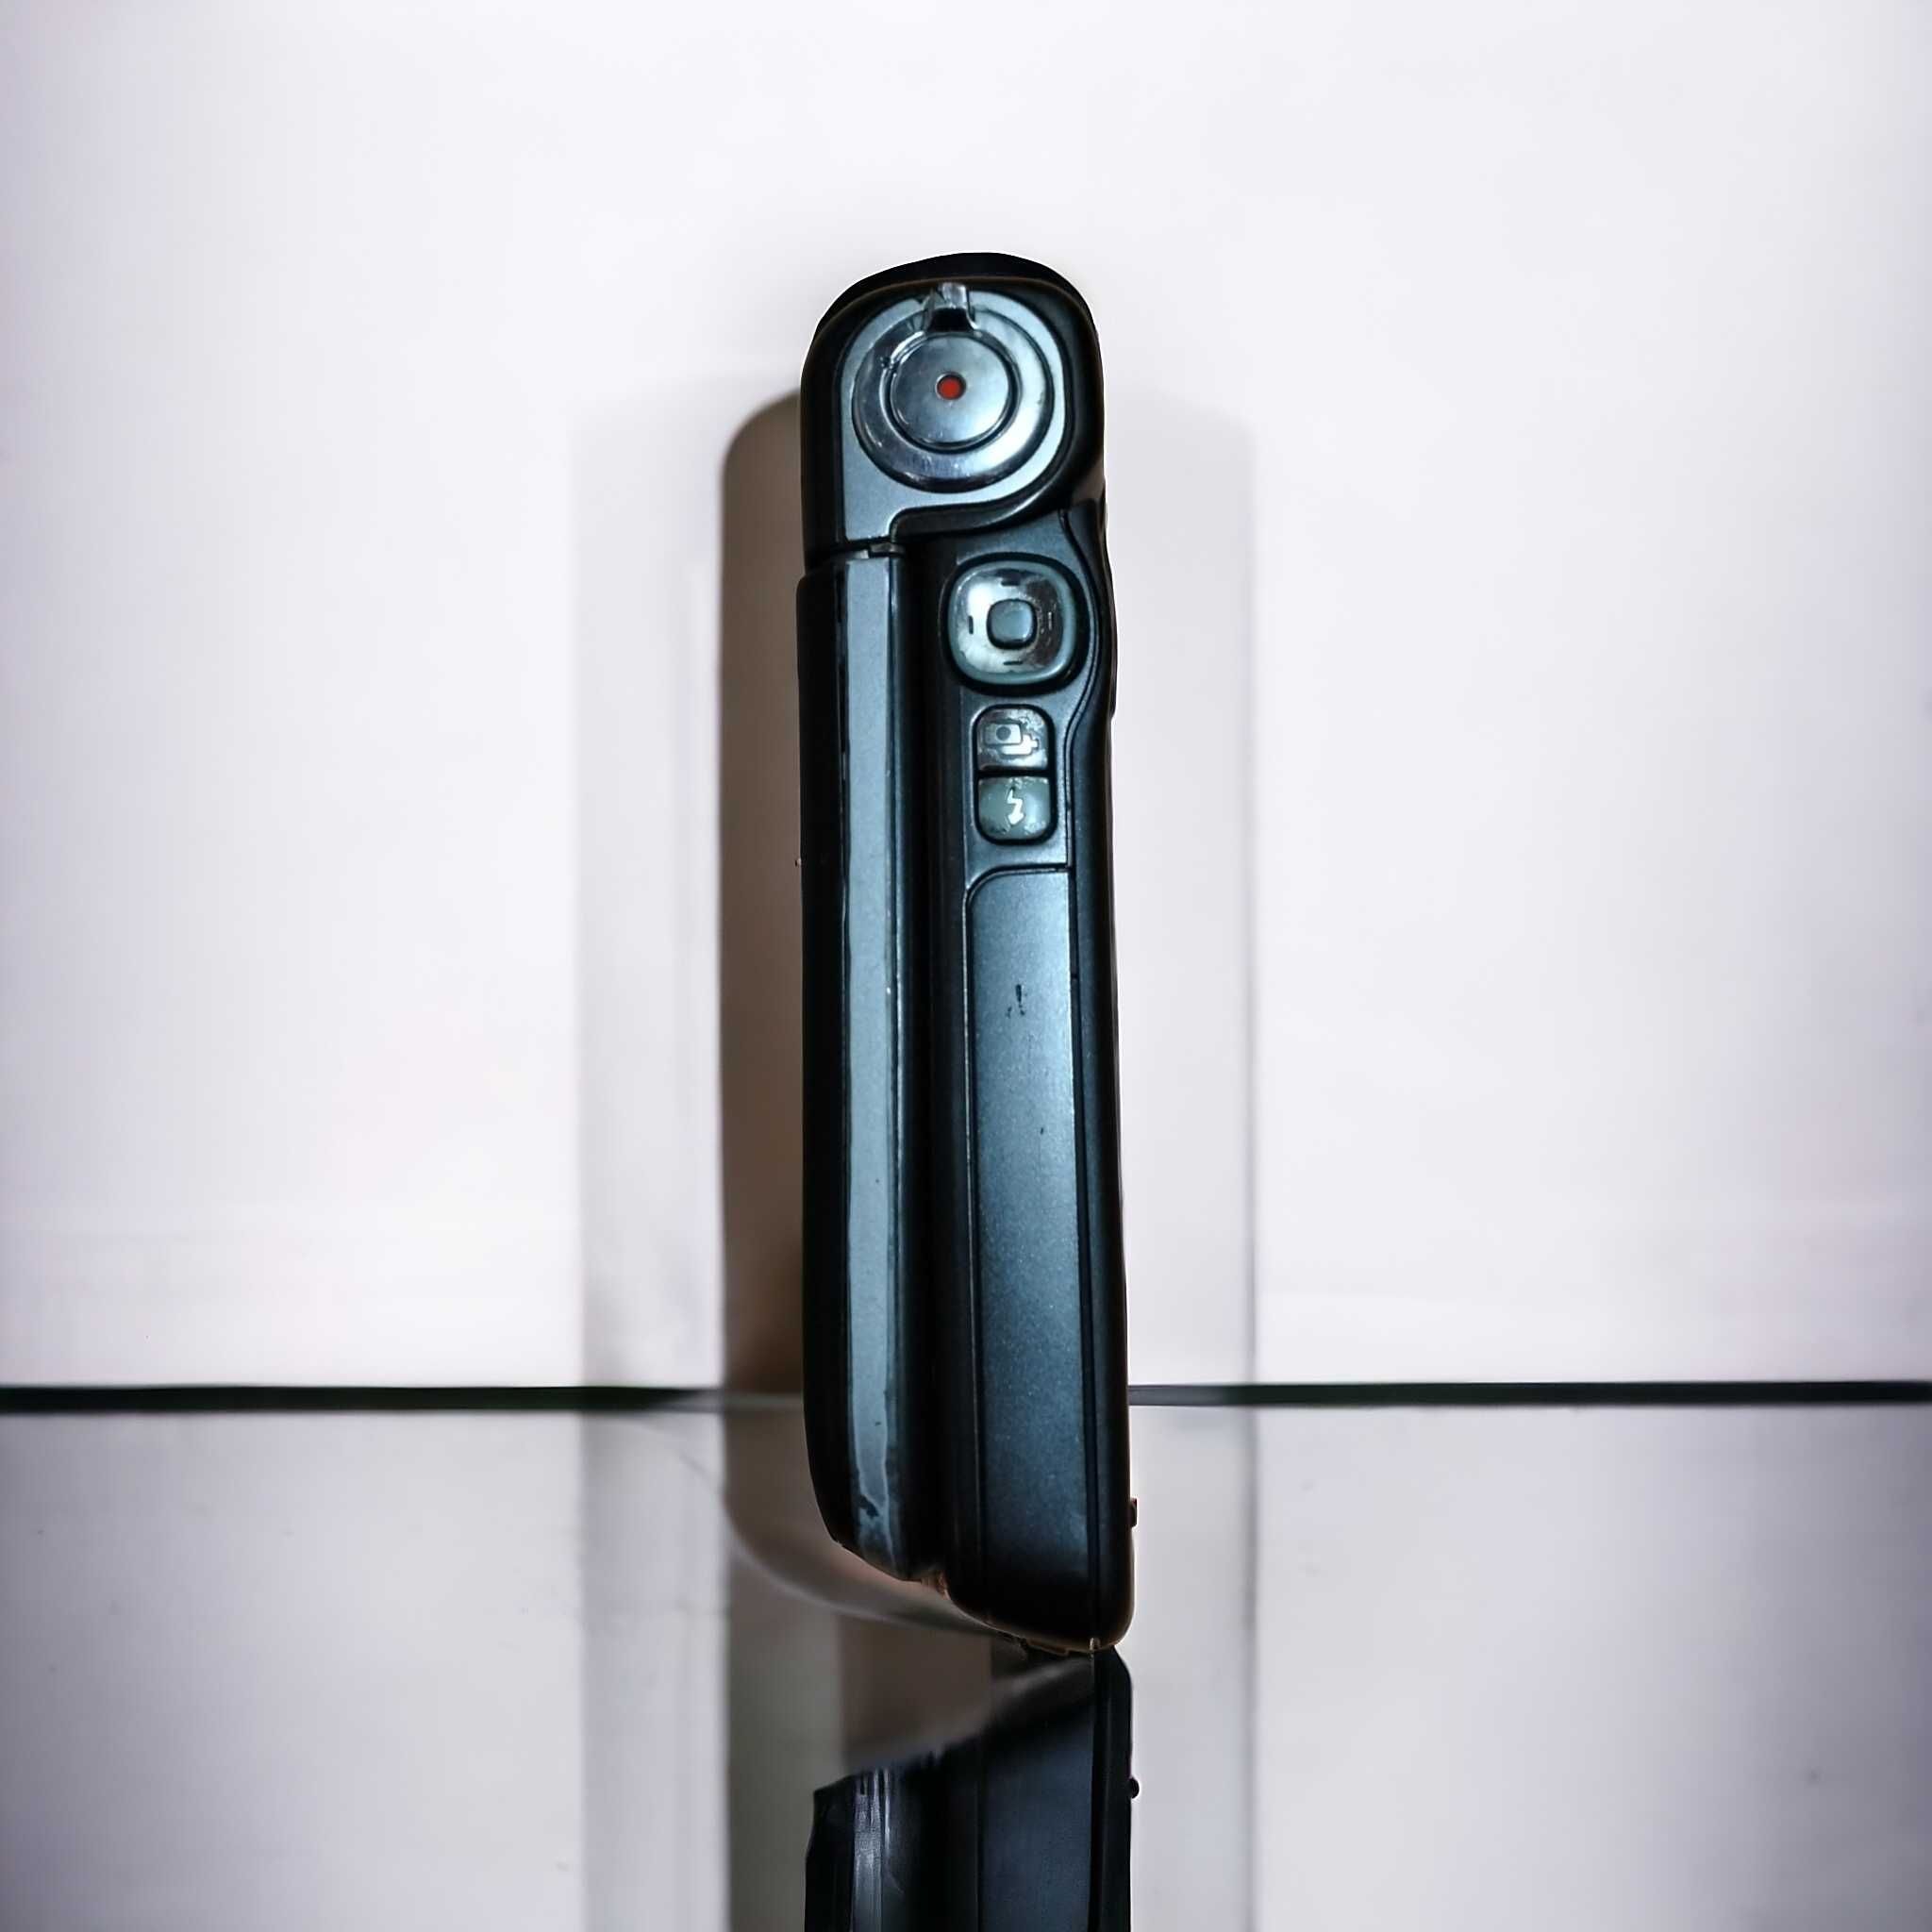 Nokia n93 камерафон, телефон